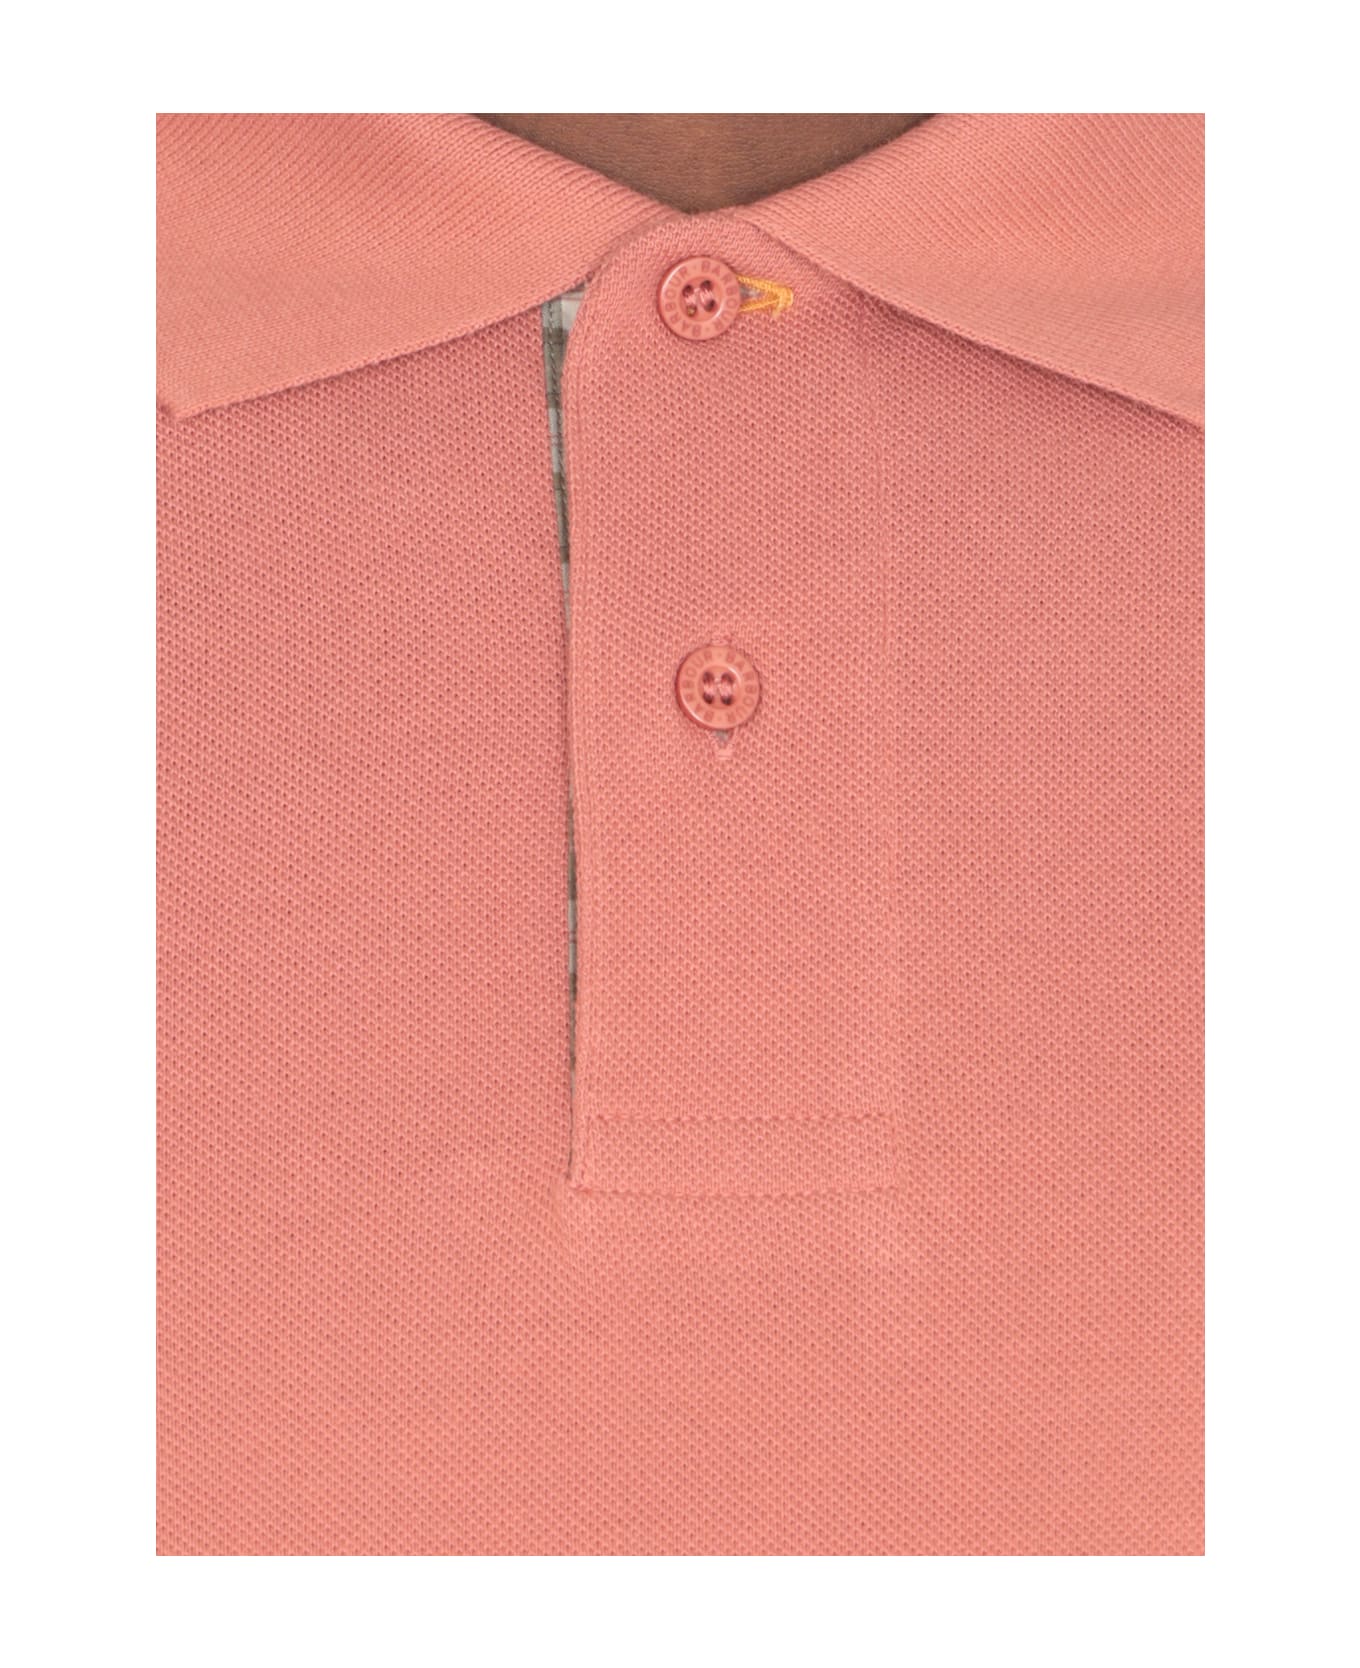 Barbour Logoed Polo Shirt - Pink